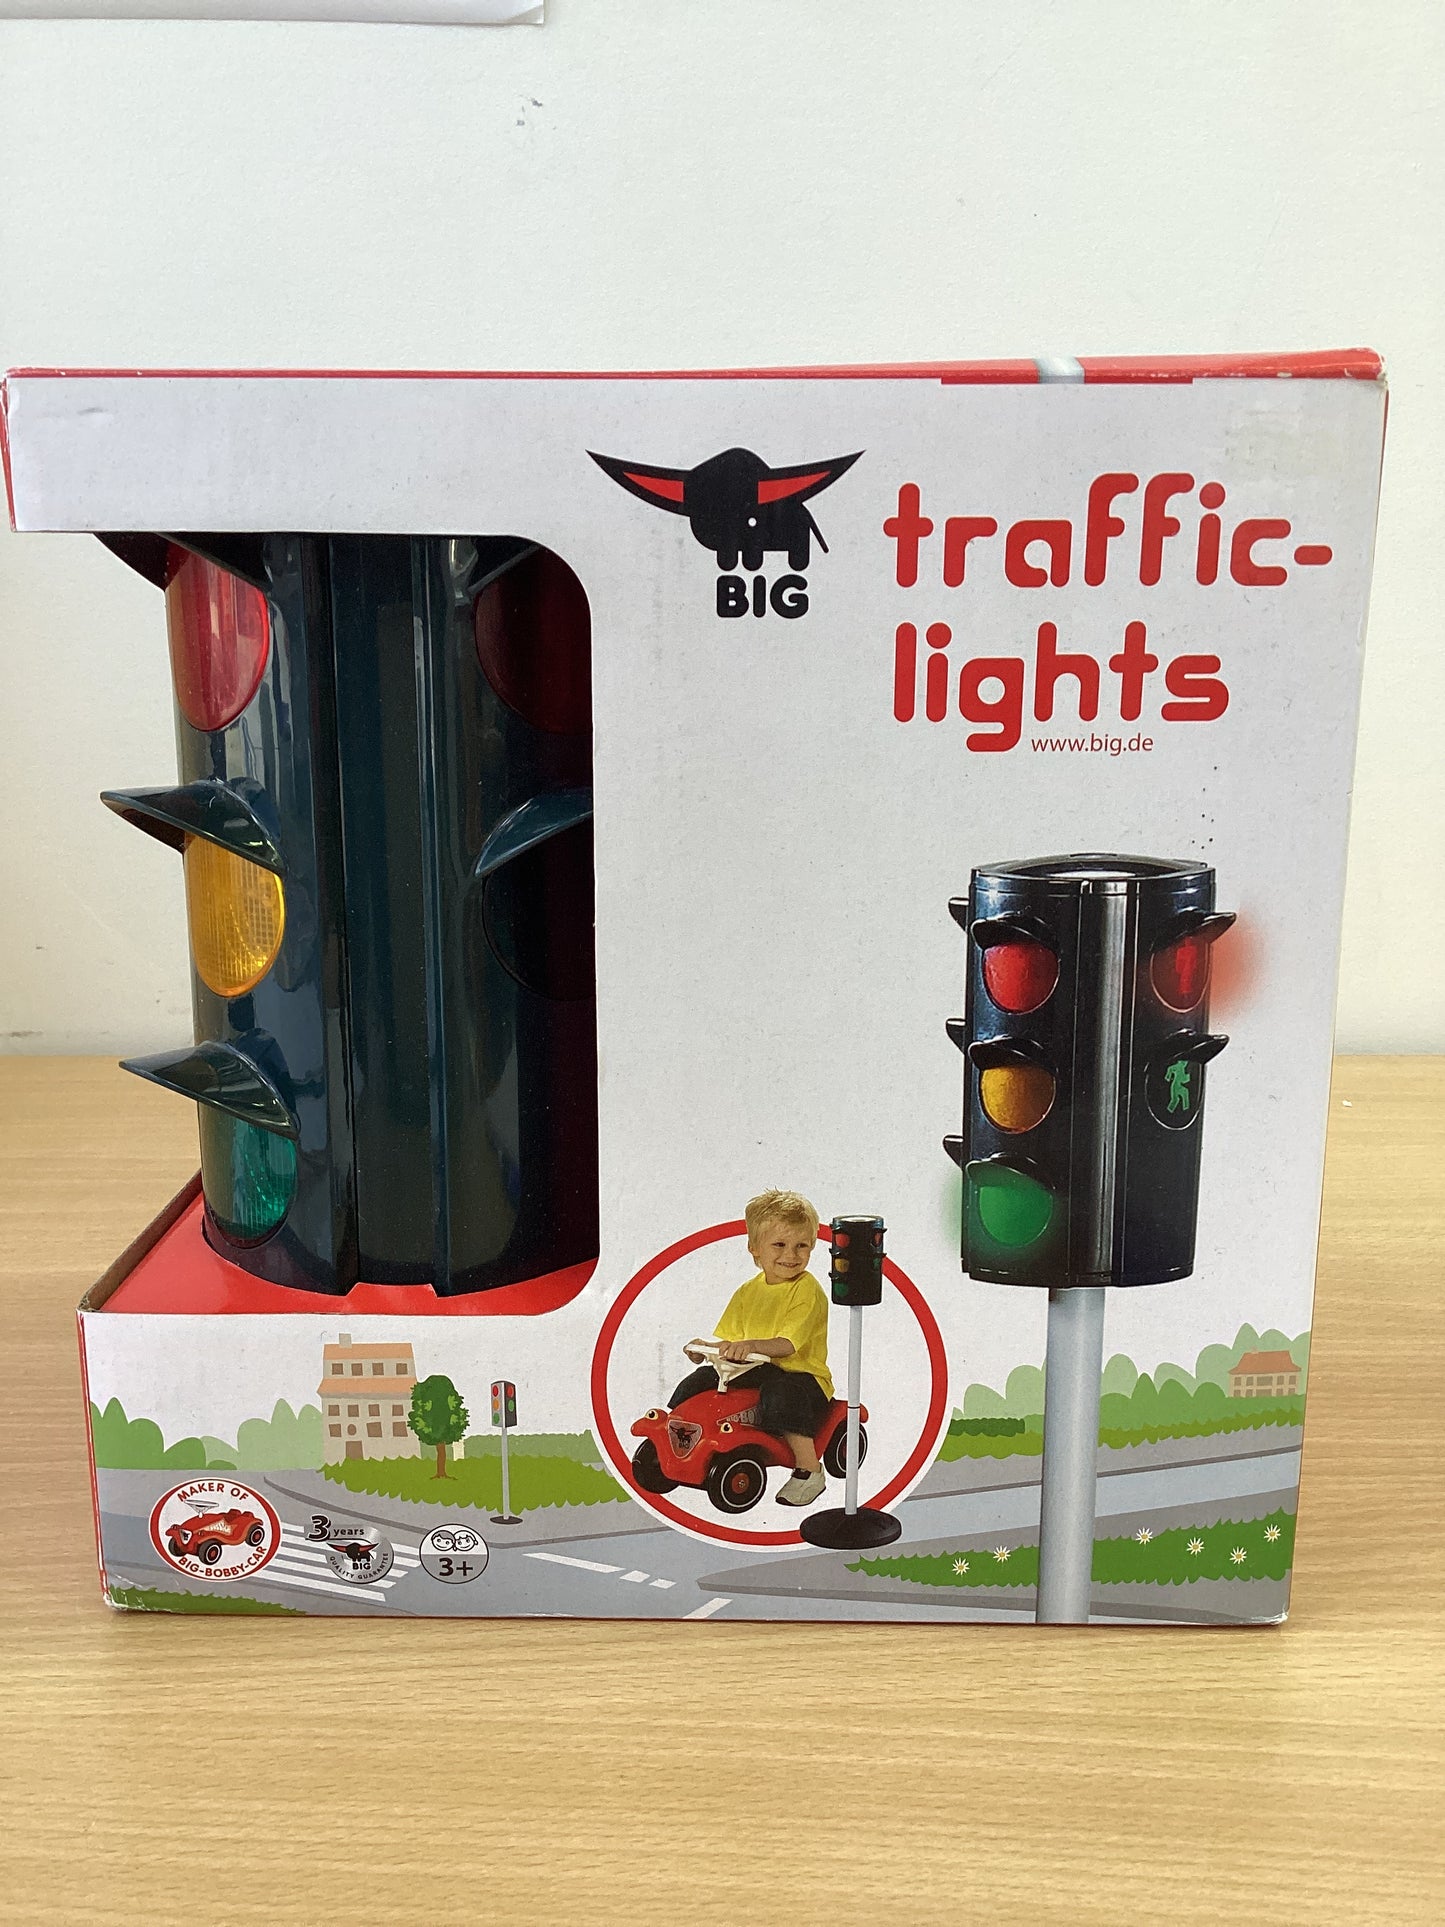 Toy traffic lights